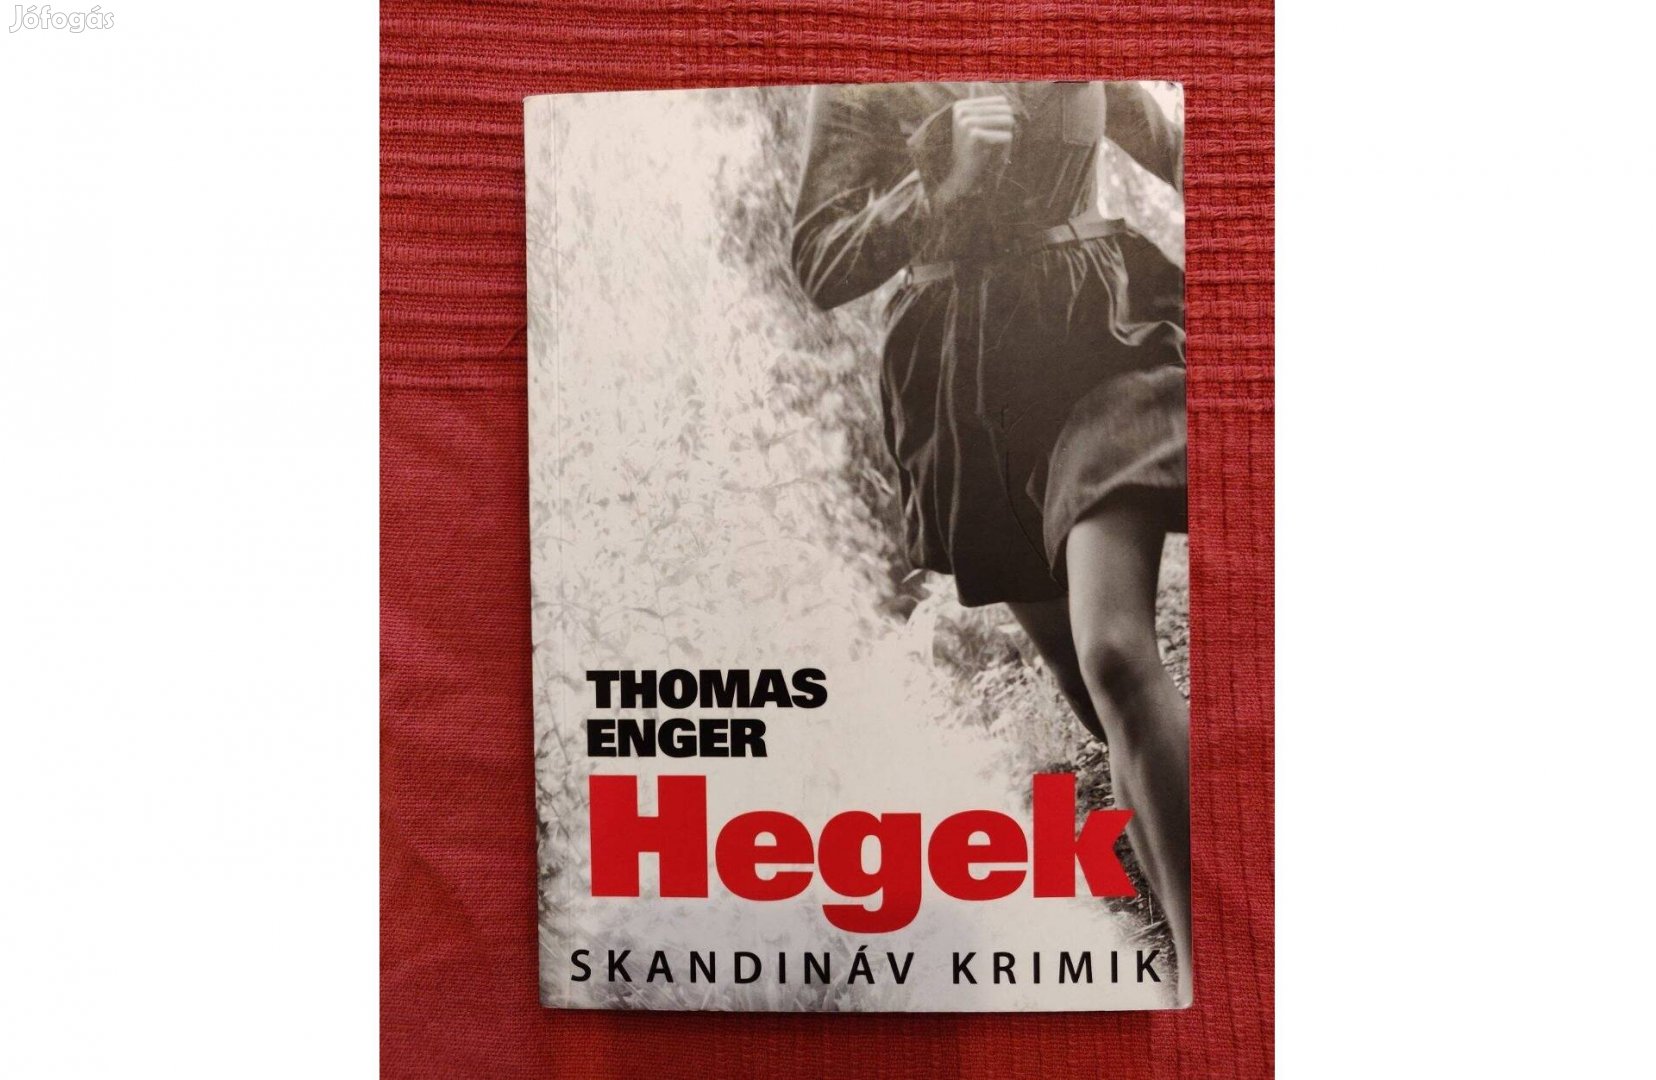 Thomas Enger - Hegek (Henning Juul 1.) skandináv krimi